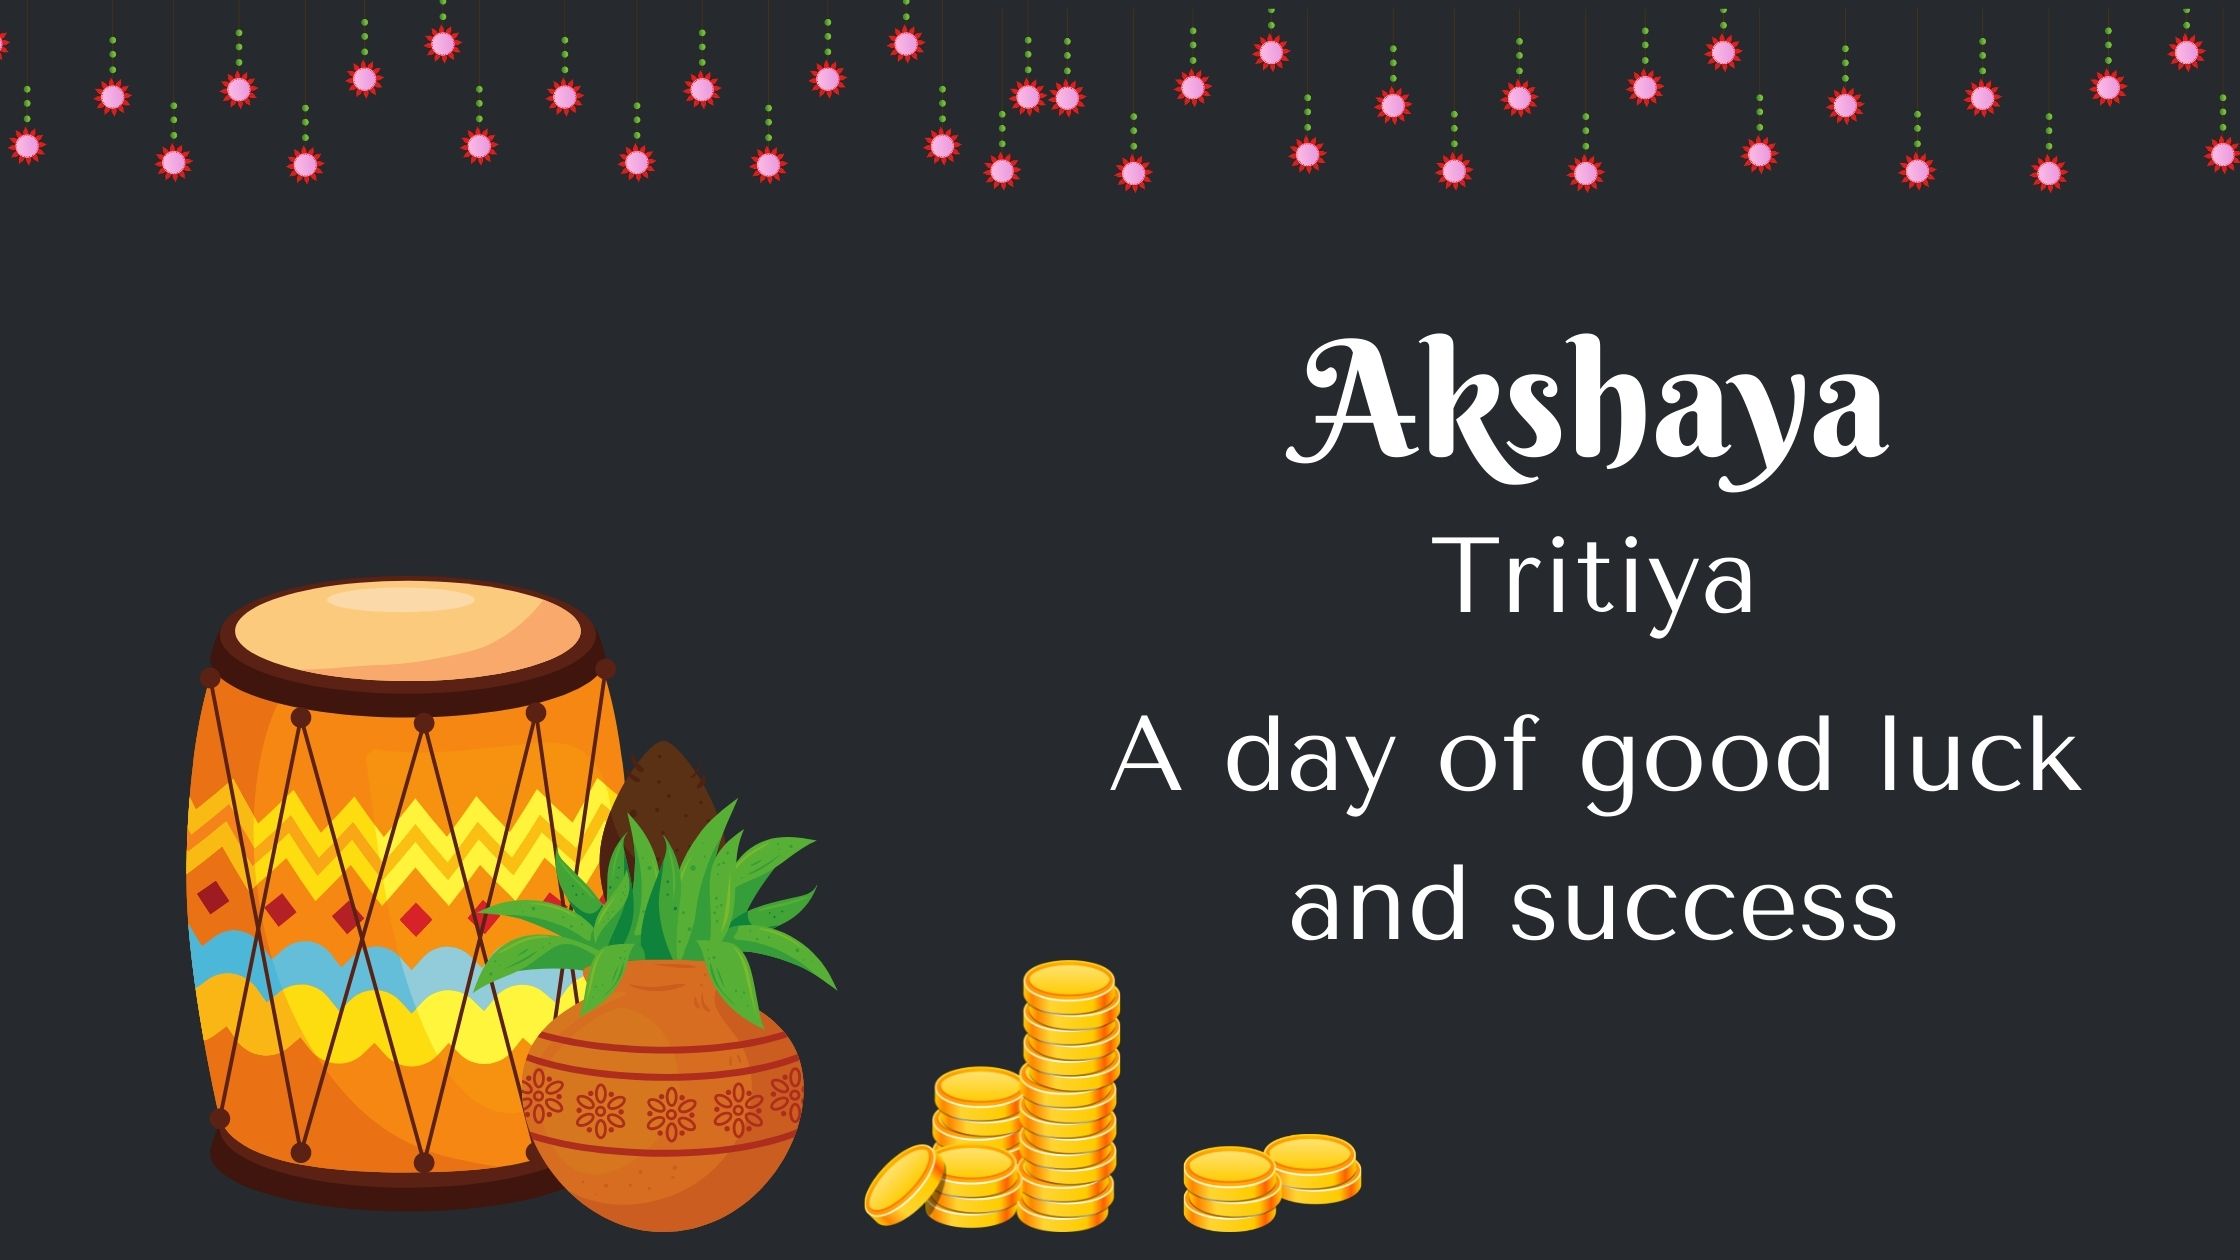 Akshaya Tritiya- A day of good luck and success